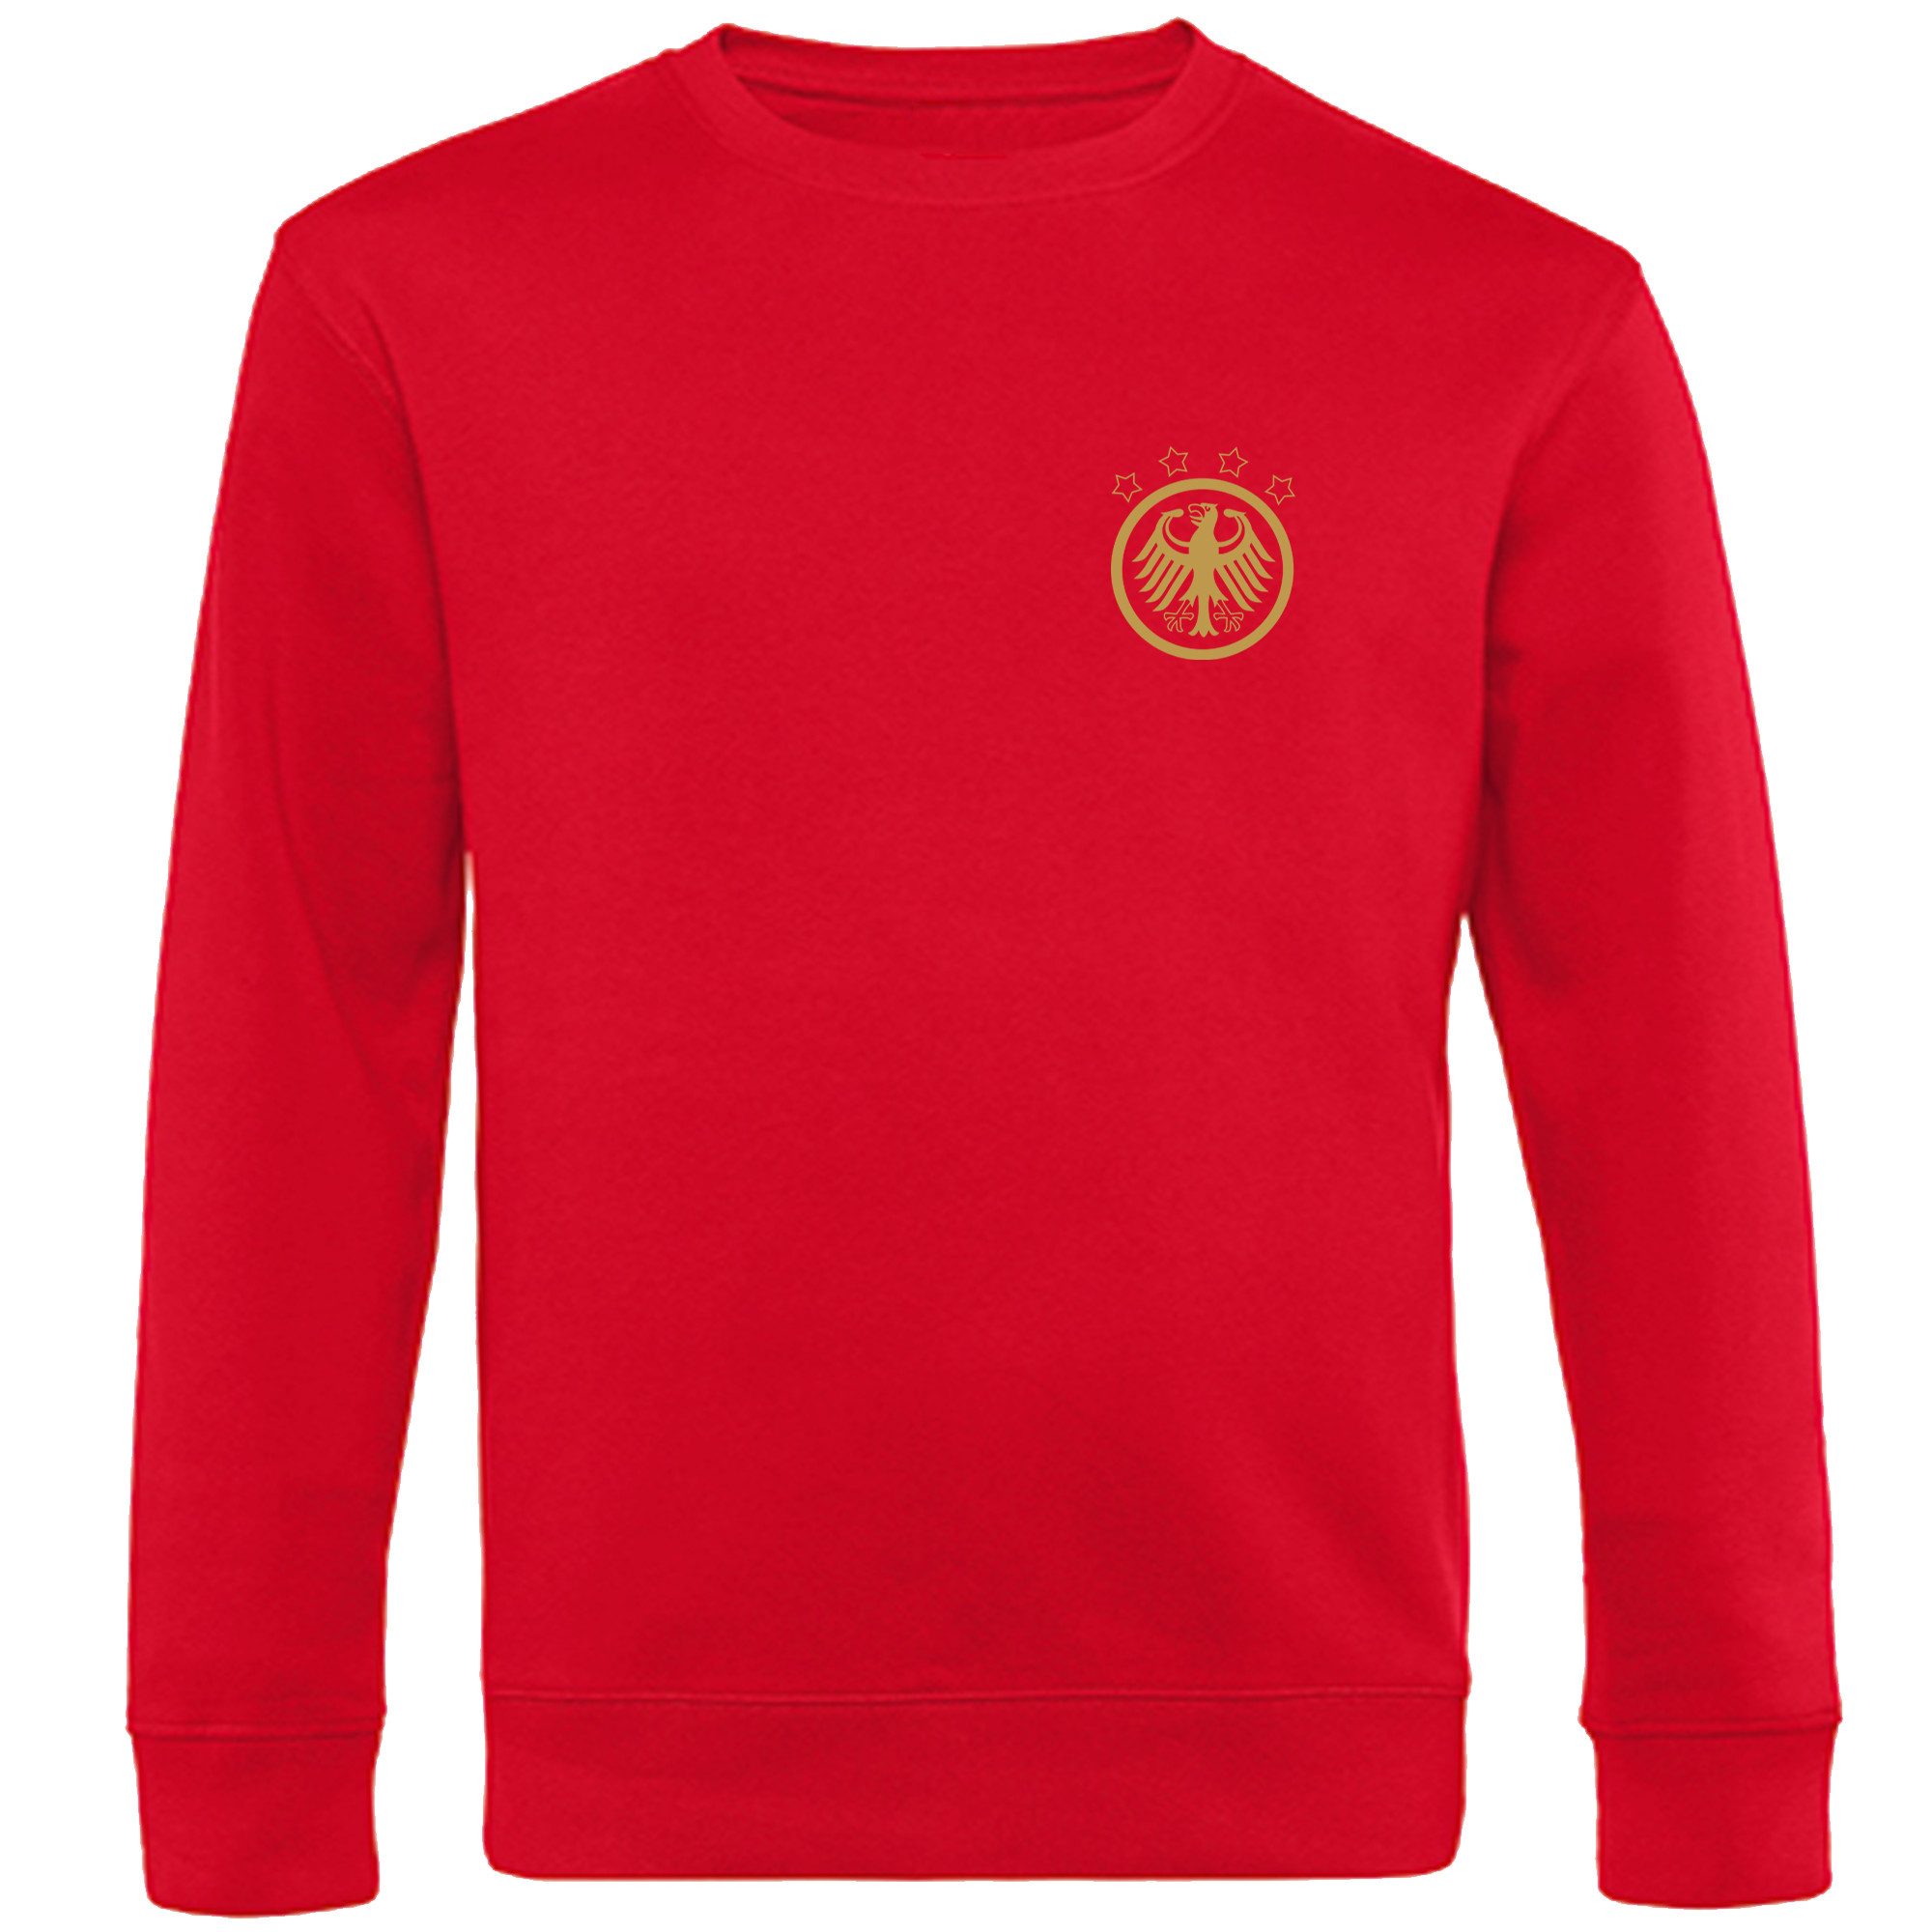 multifanshop Sweatshirt Germany - Adler Retro Gold - Pullover